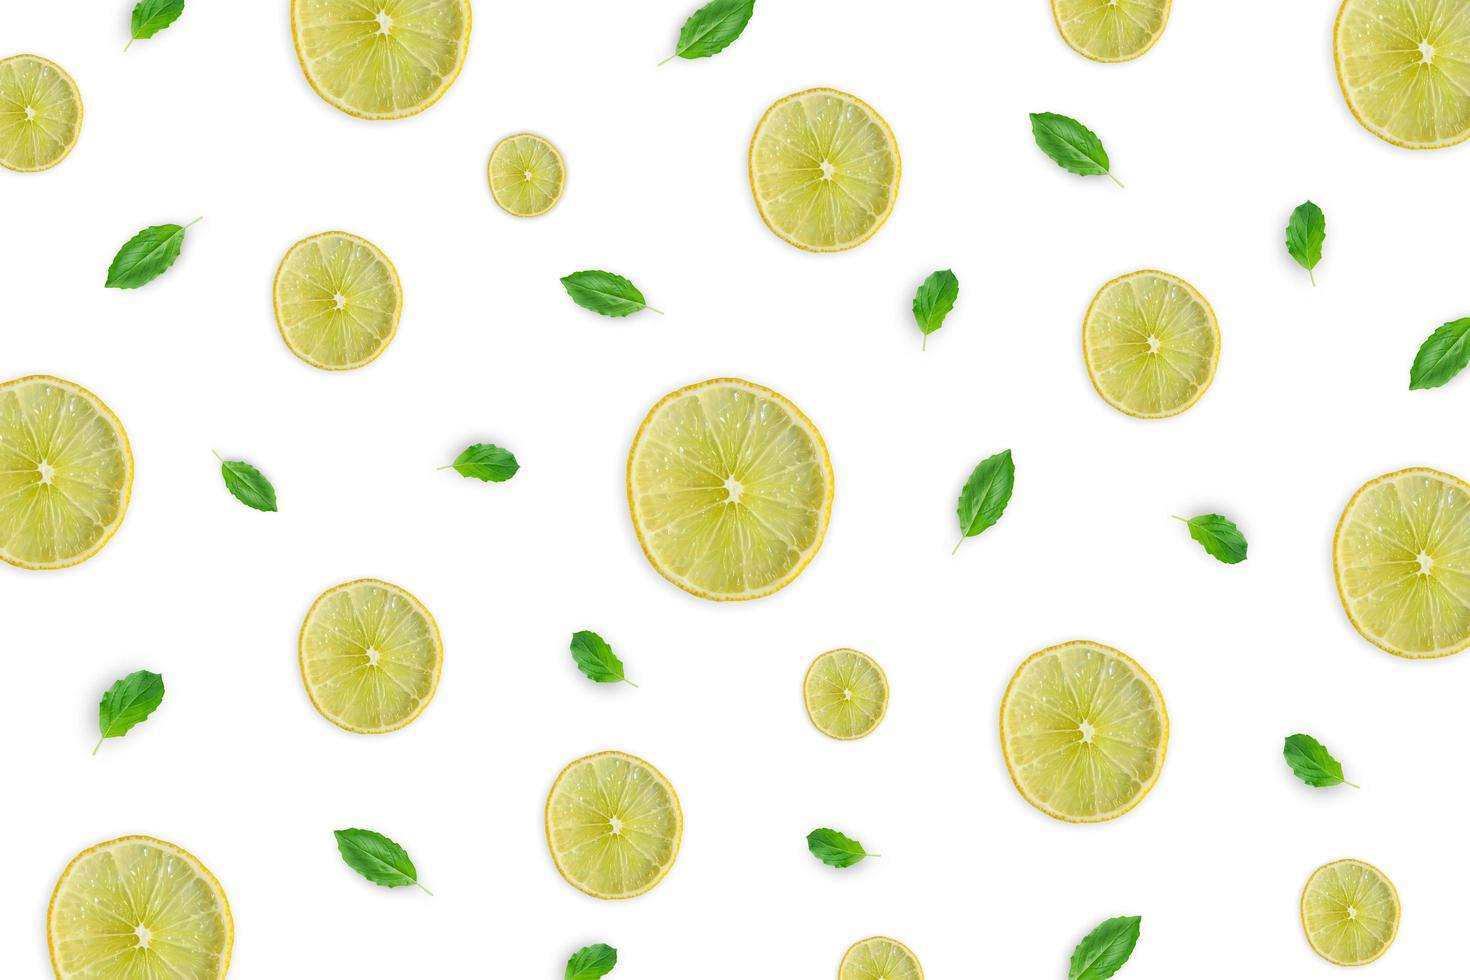 råvara med citronskiva, basilikablad på vit bakgrund. foto